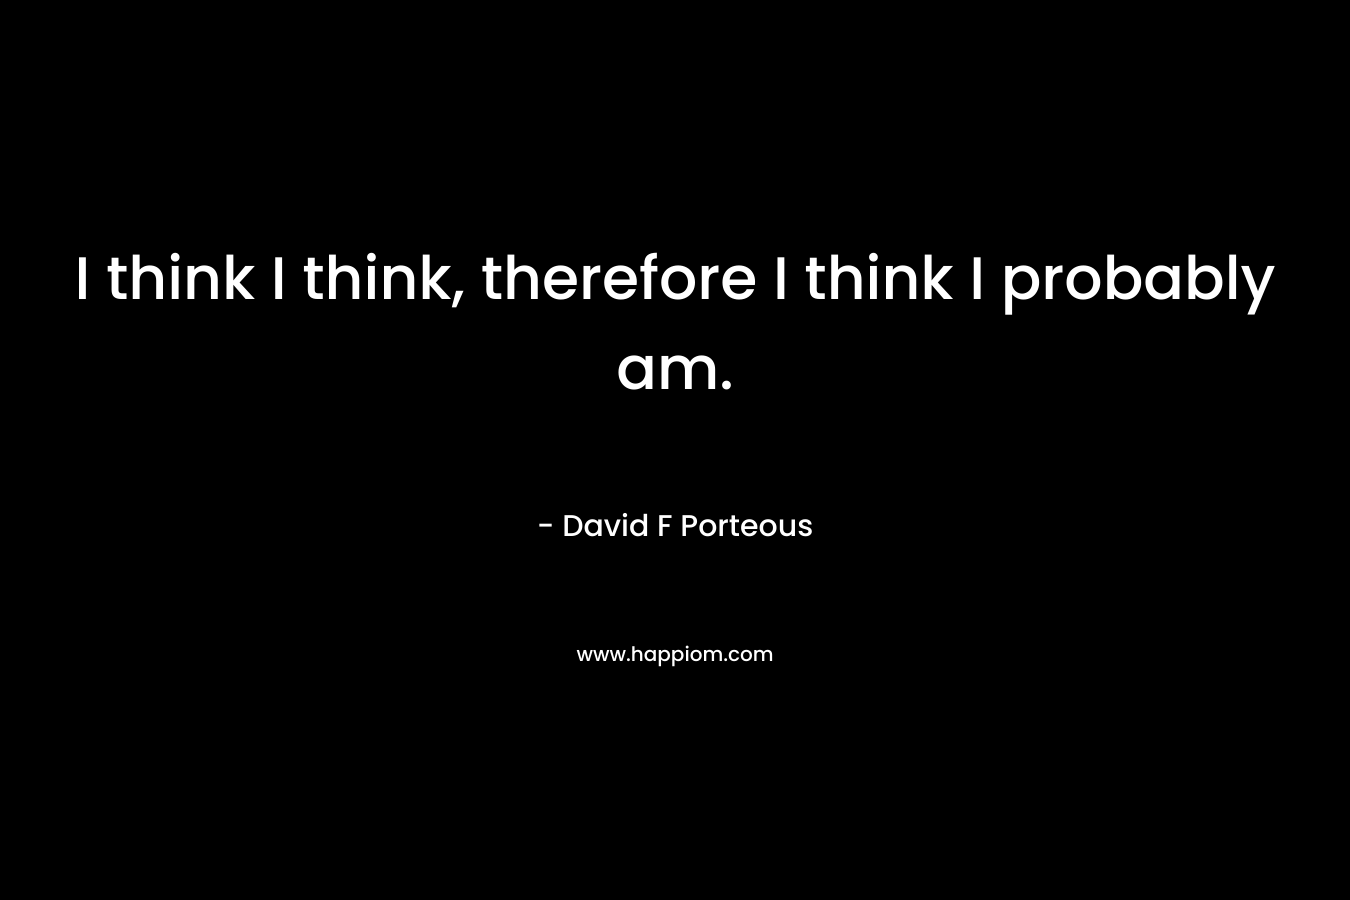 I think I think, therefore I think I probably am.